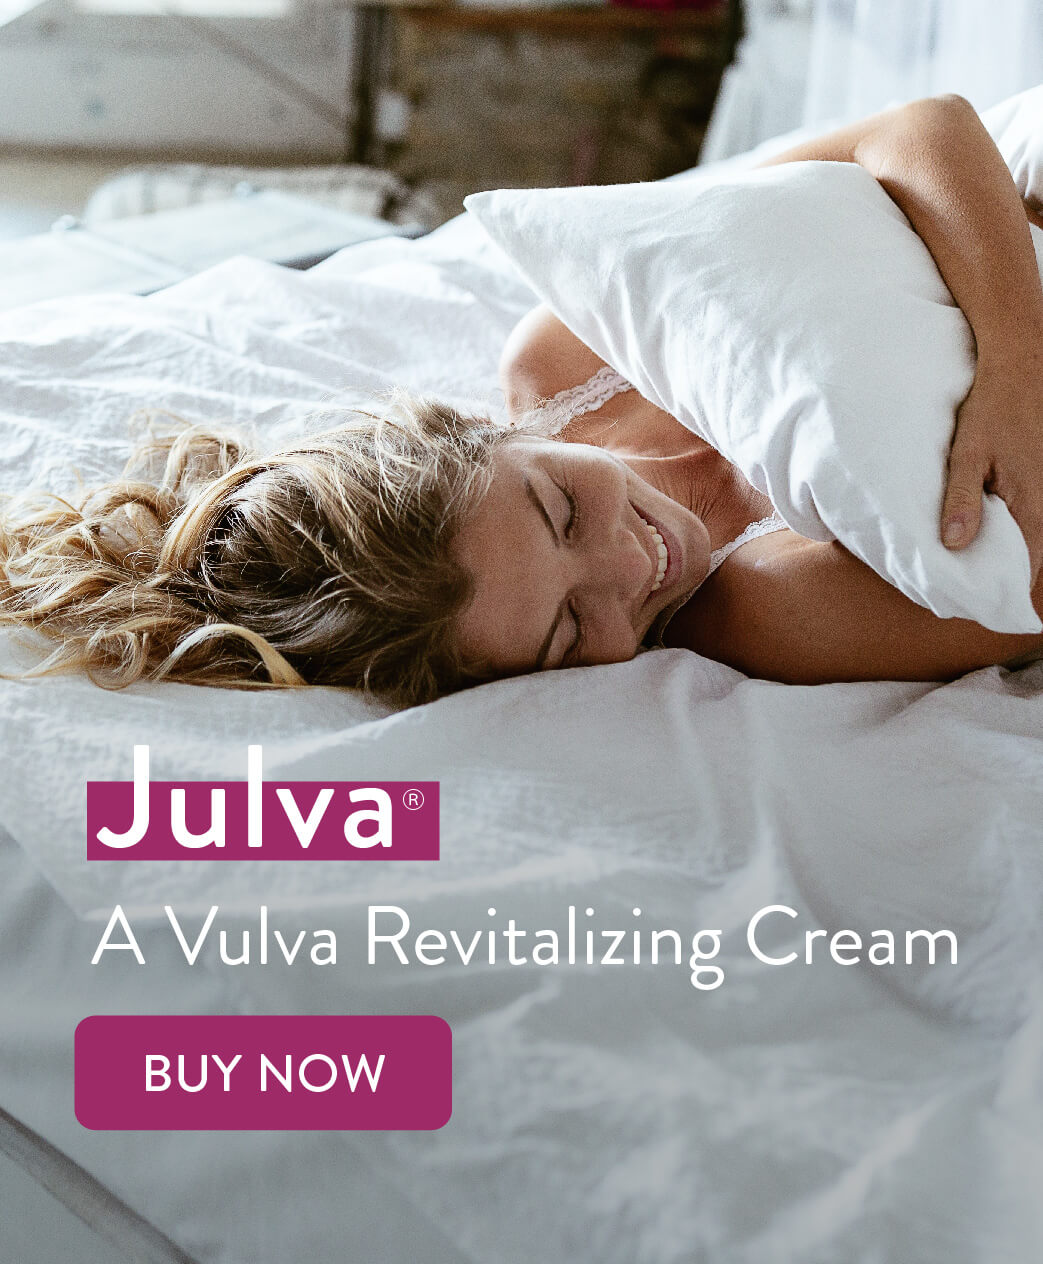 Julva® A Vulva Revitalizing Cream. Buy Now